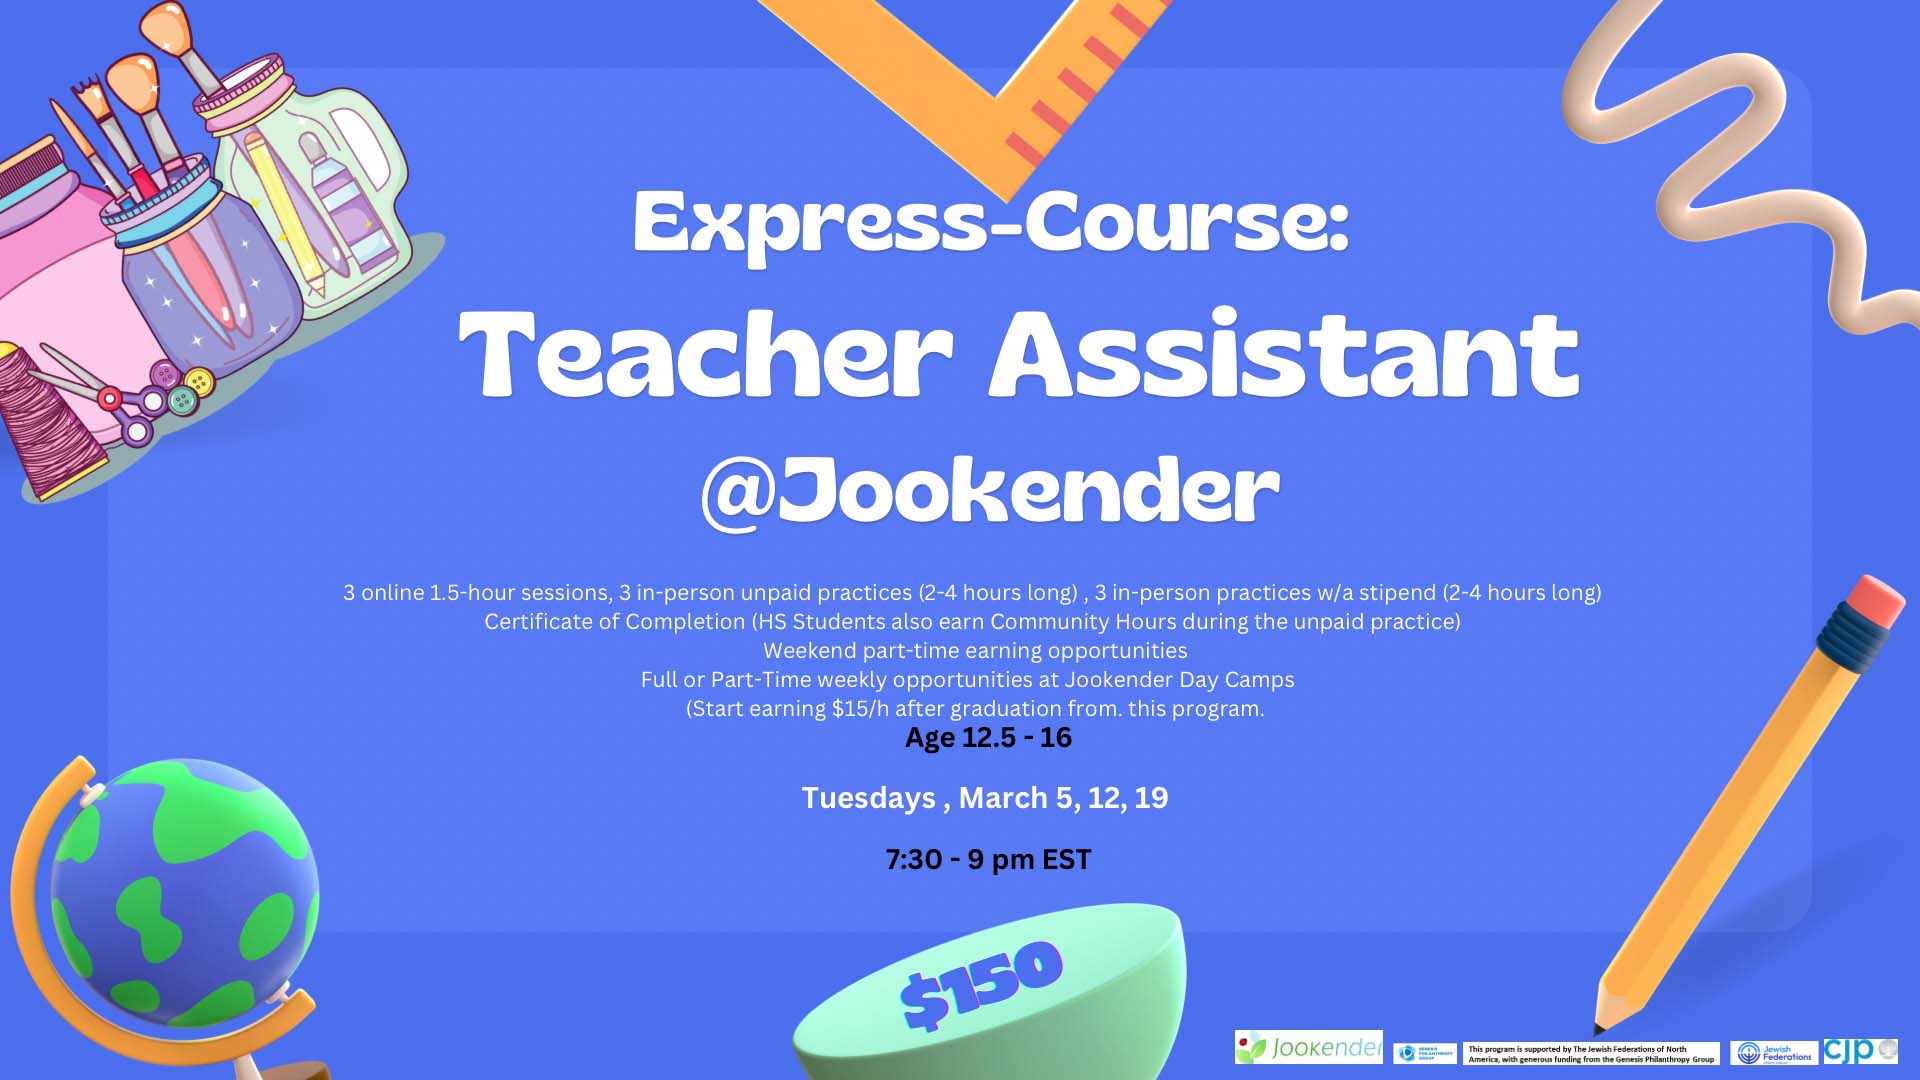 Express-Course: Teacher Assistant